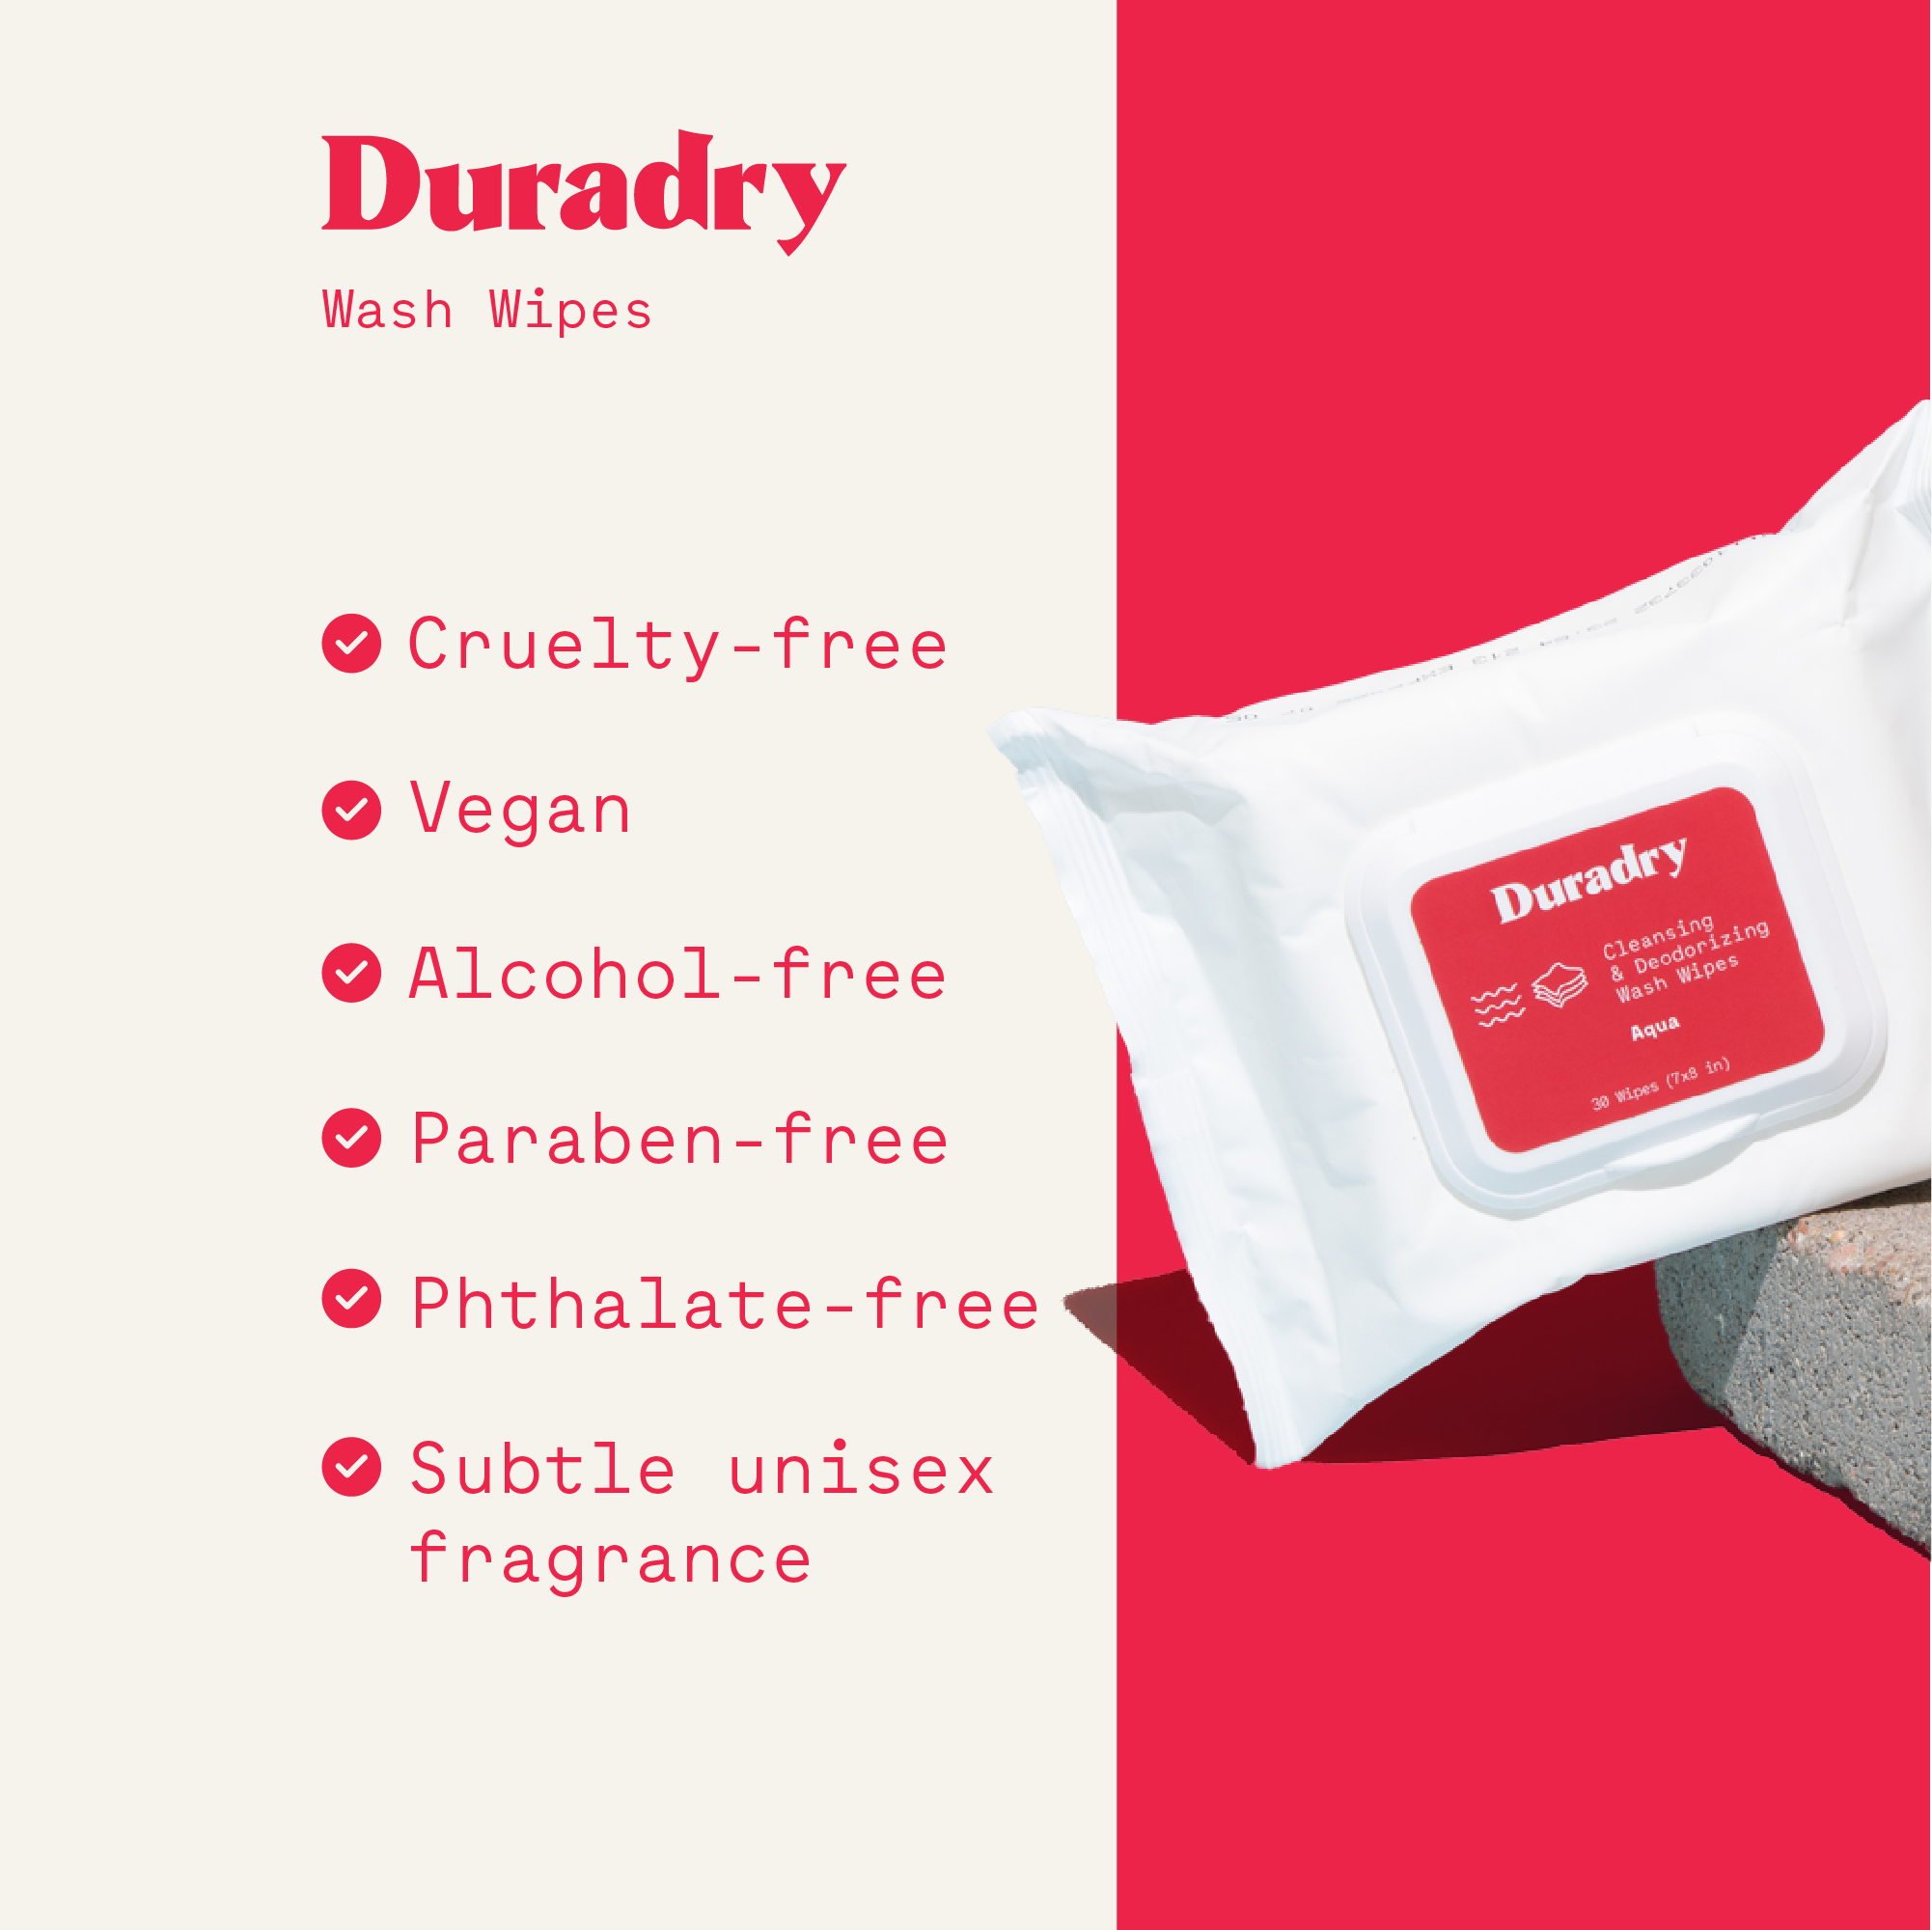  Duradry Wash Wipes by Duradry Duradry Perfumarie